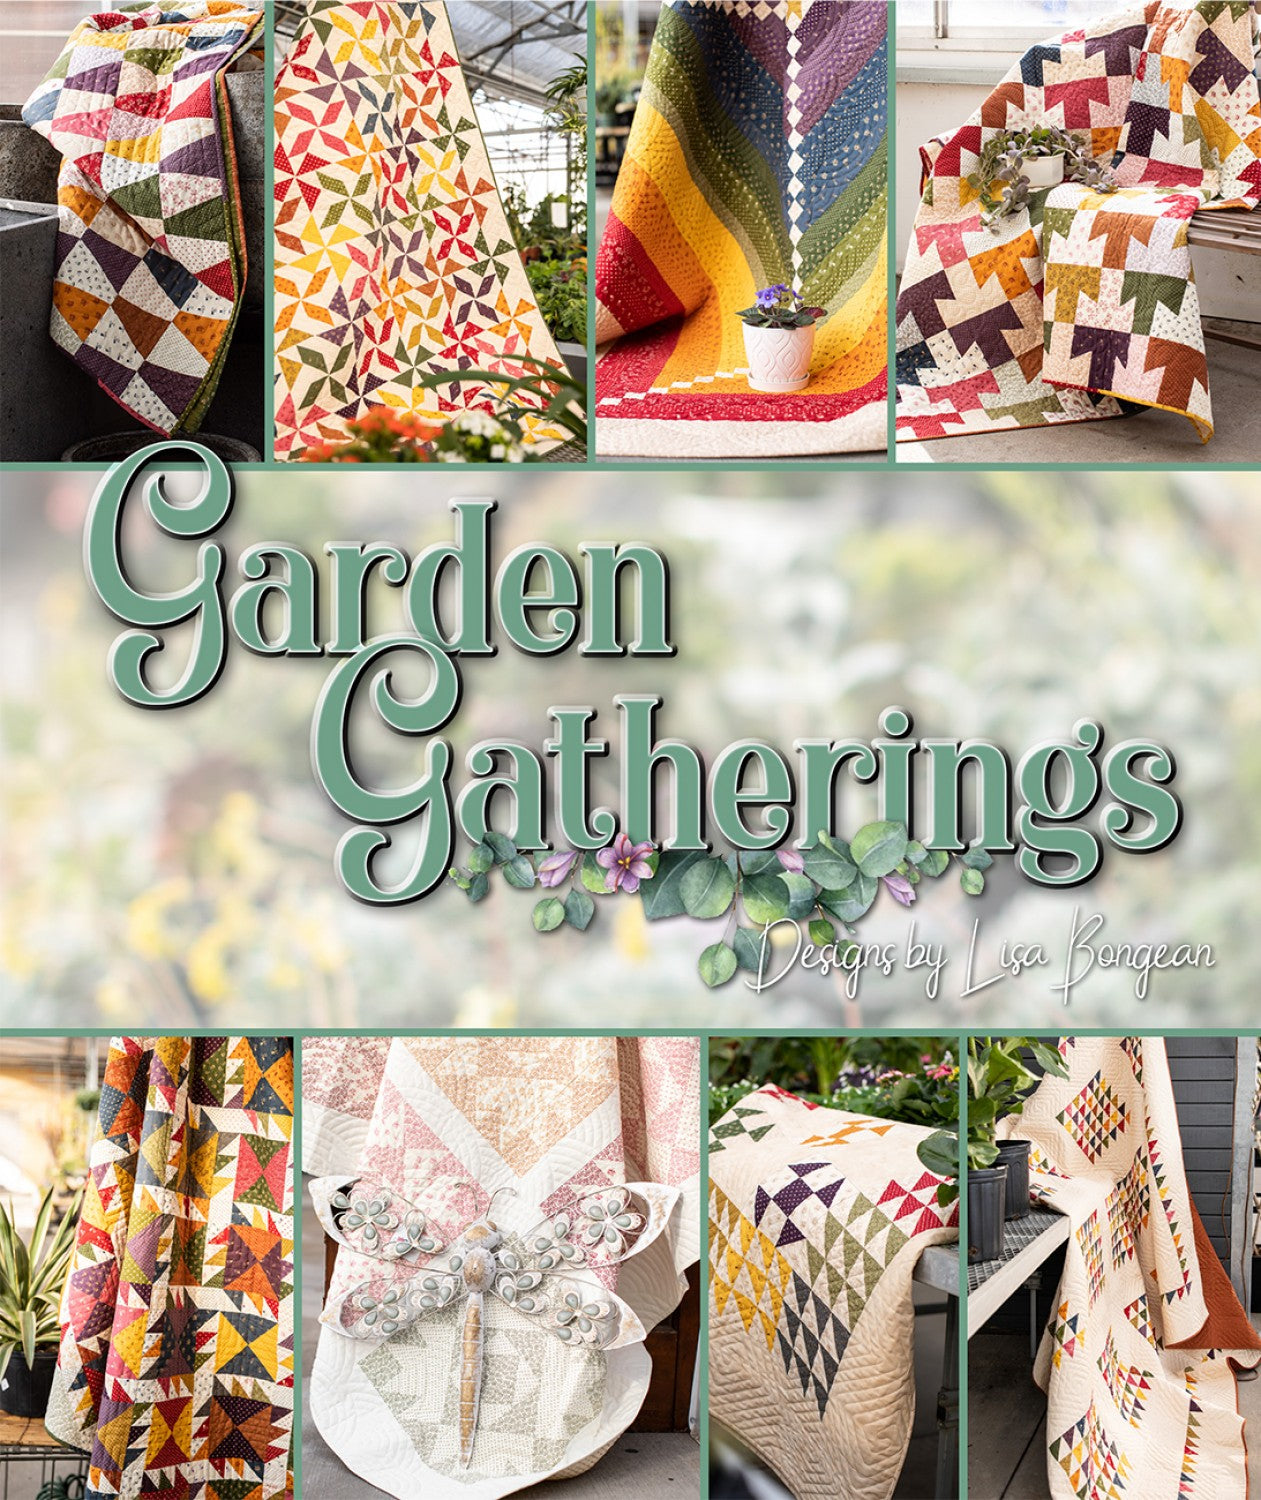 Garden Gatherings Quilt Pattern Book by Lisa Bongean of Primitive Gatherings